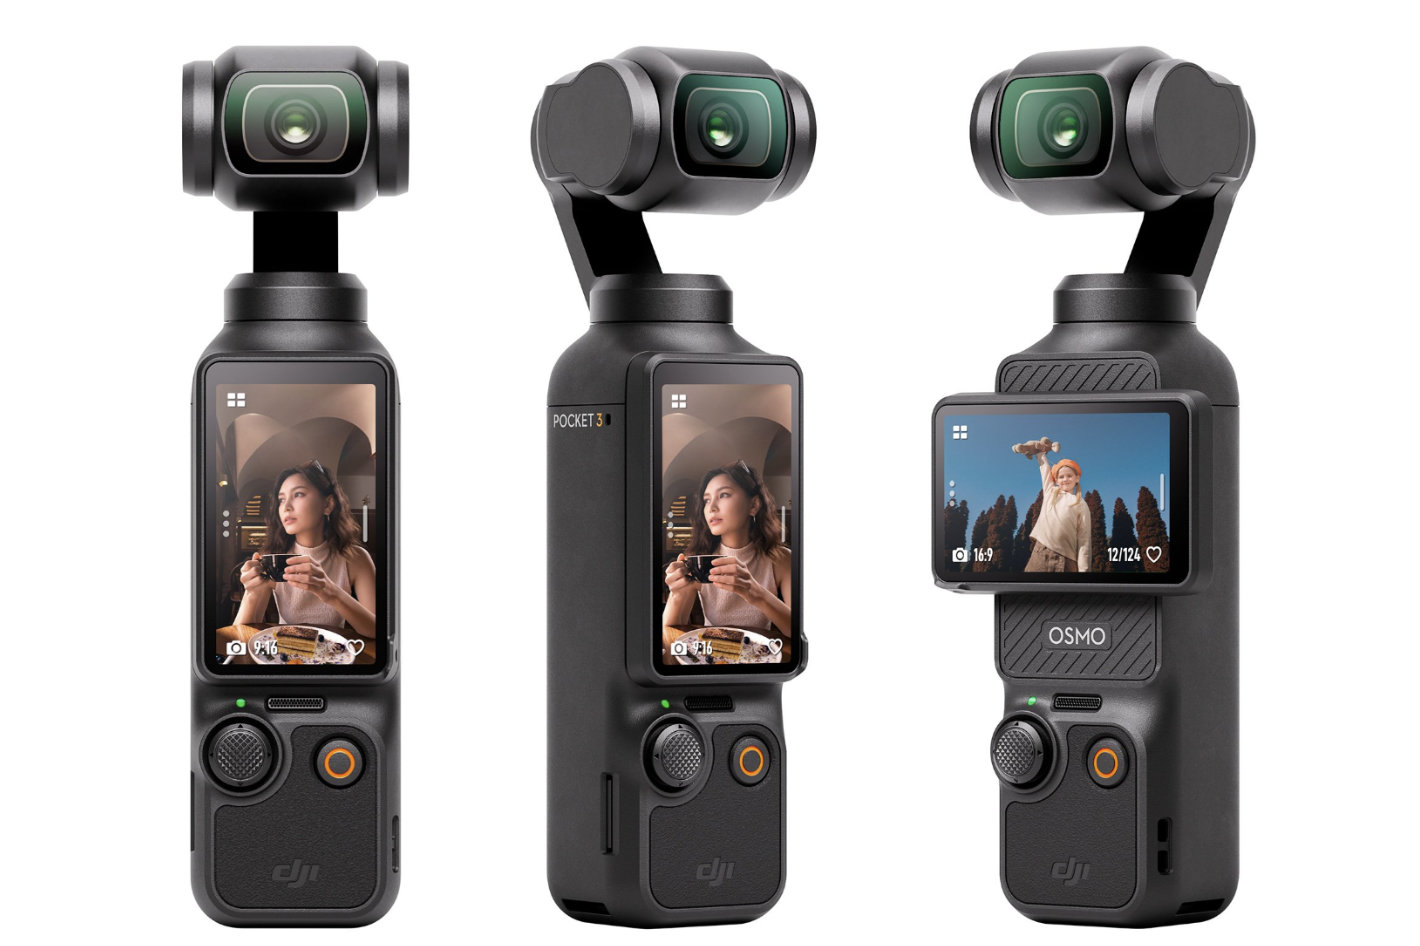 DJI announces new Osmo Pocket 3 handheld gimbal camera